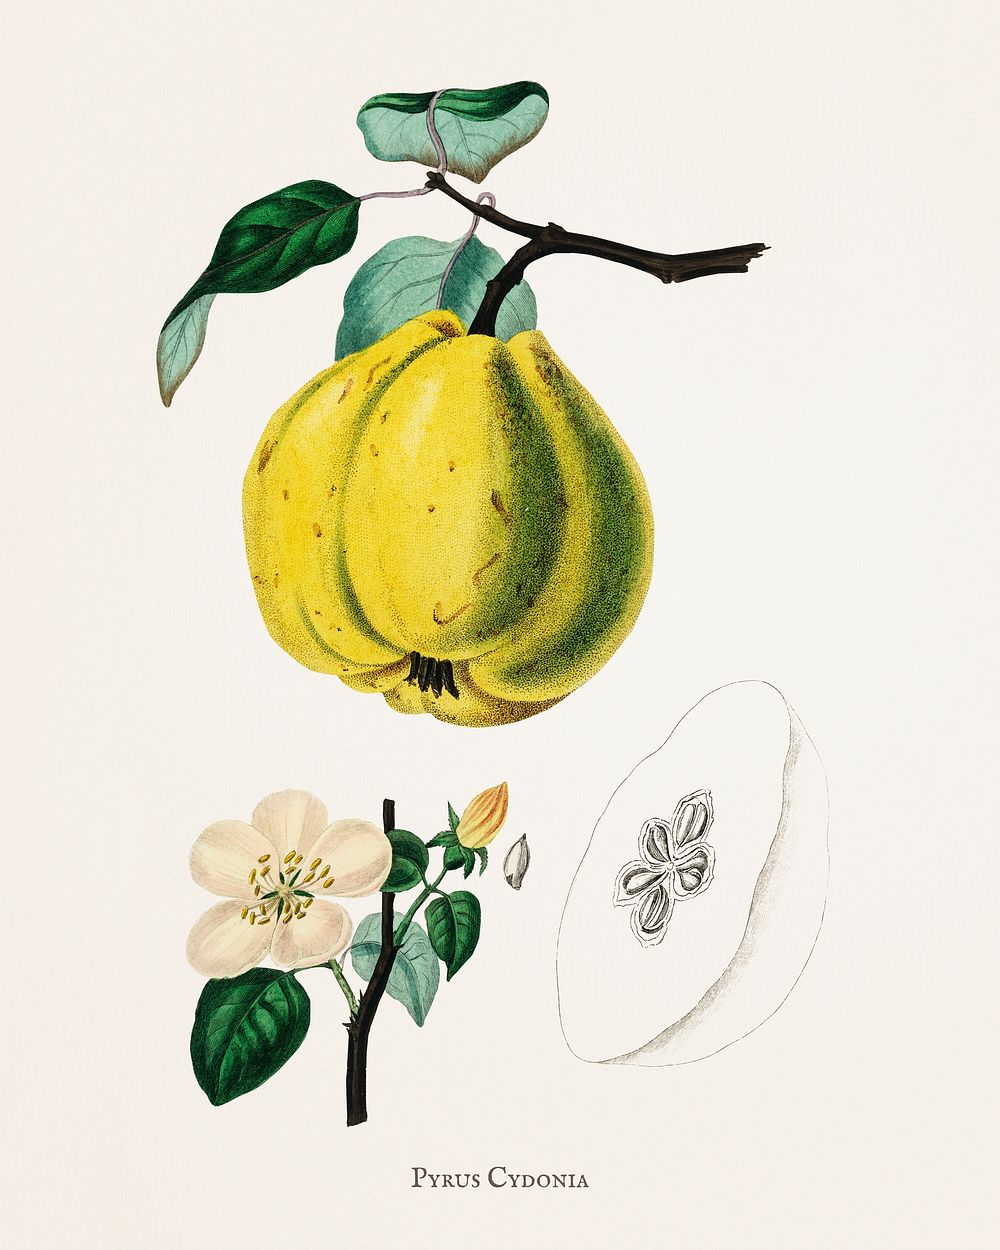 Quince (Pyrus cydonia) illustration from Medical Botany (1836) by John Stephenson and James Morss Churchill.